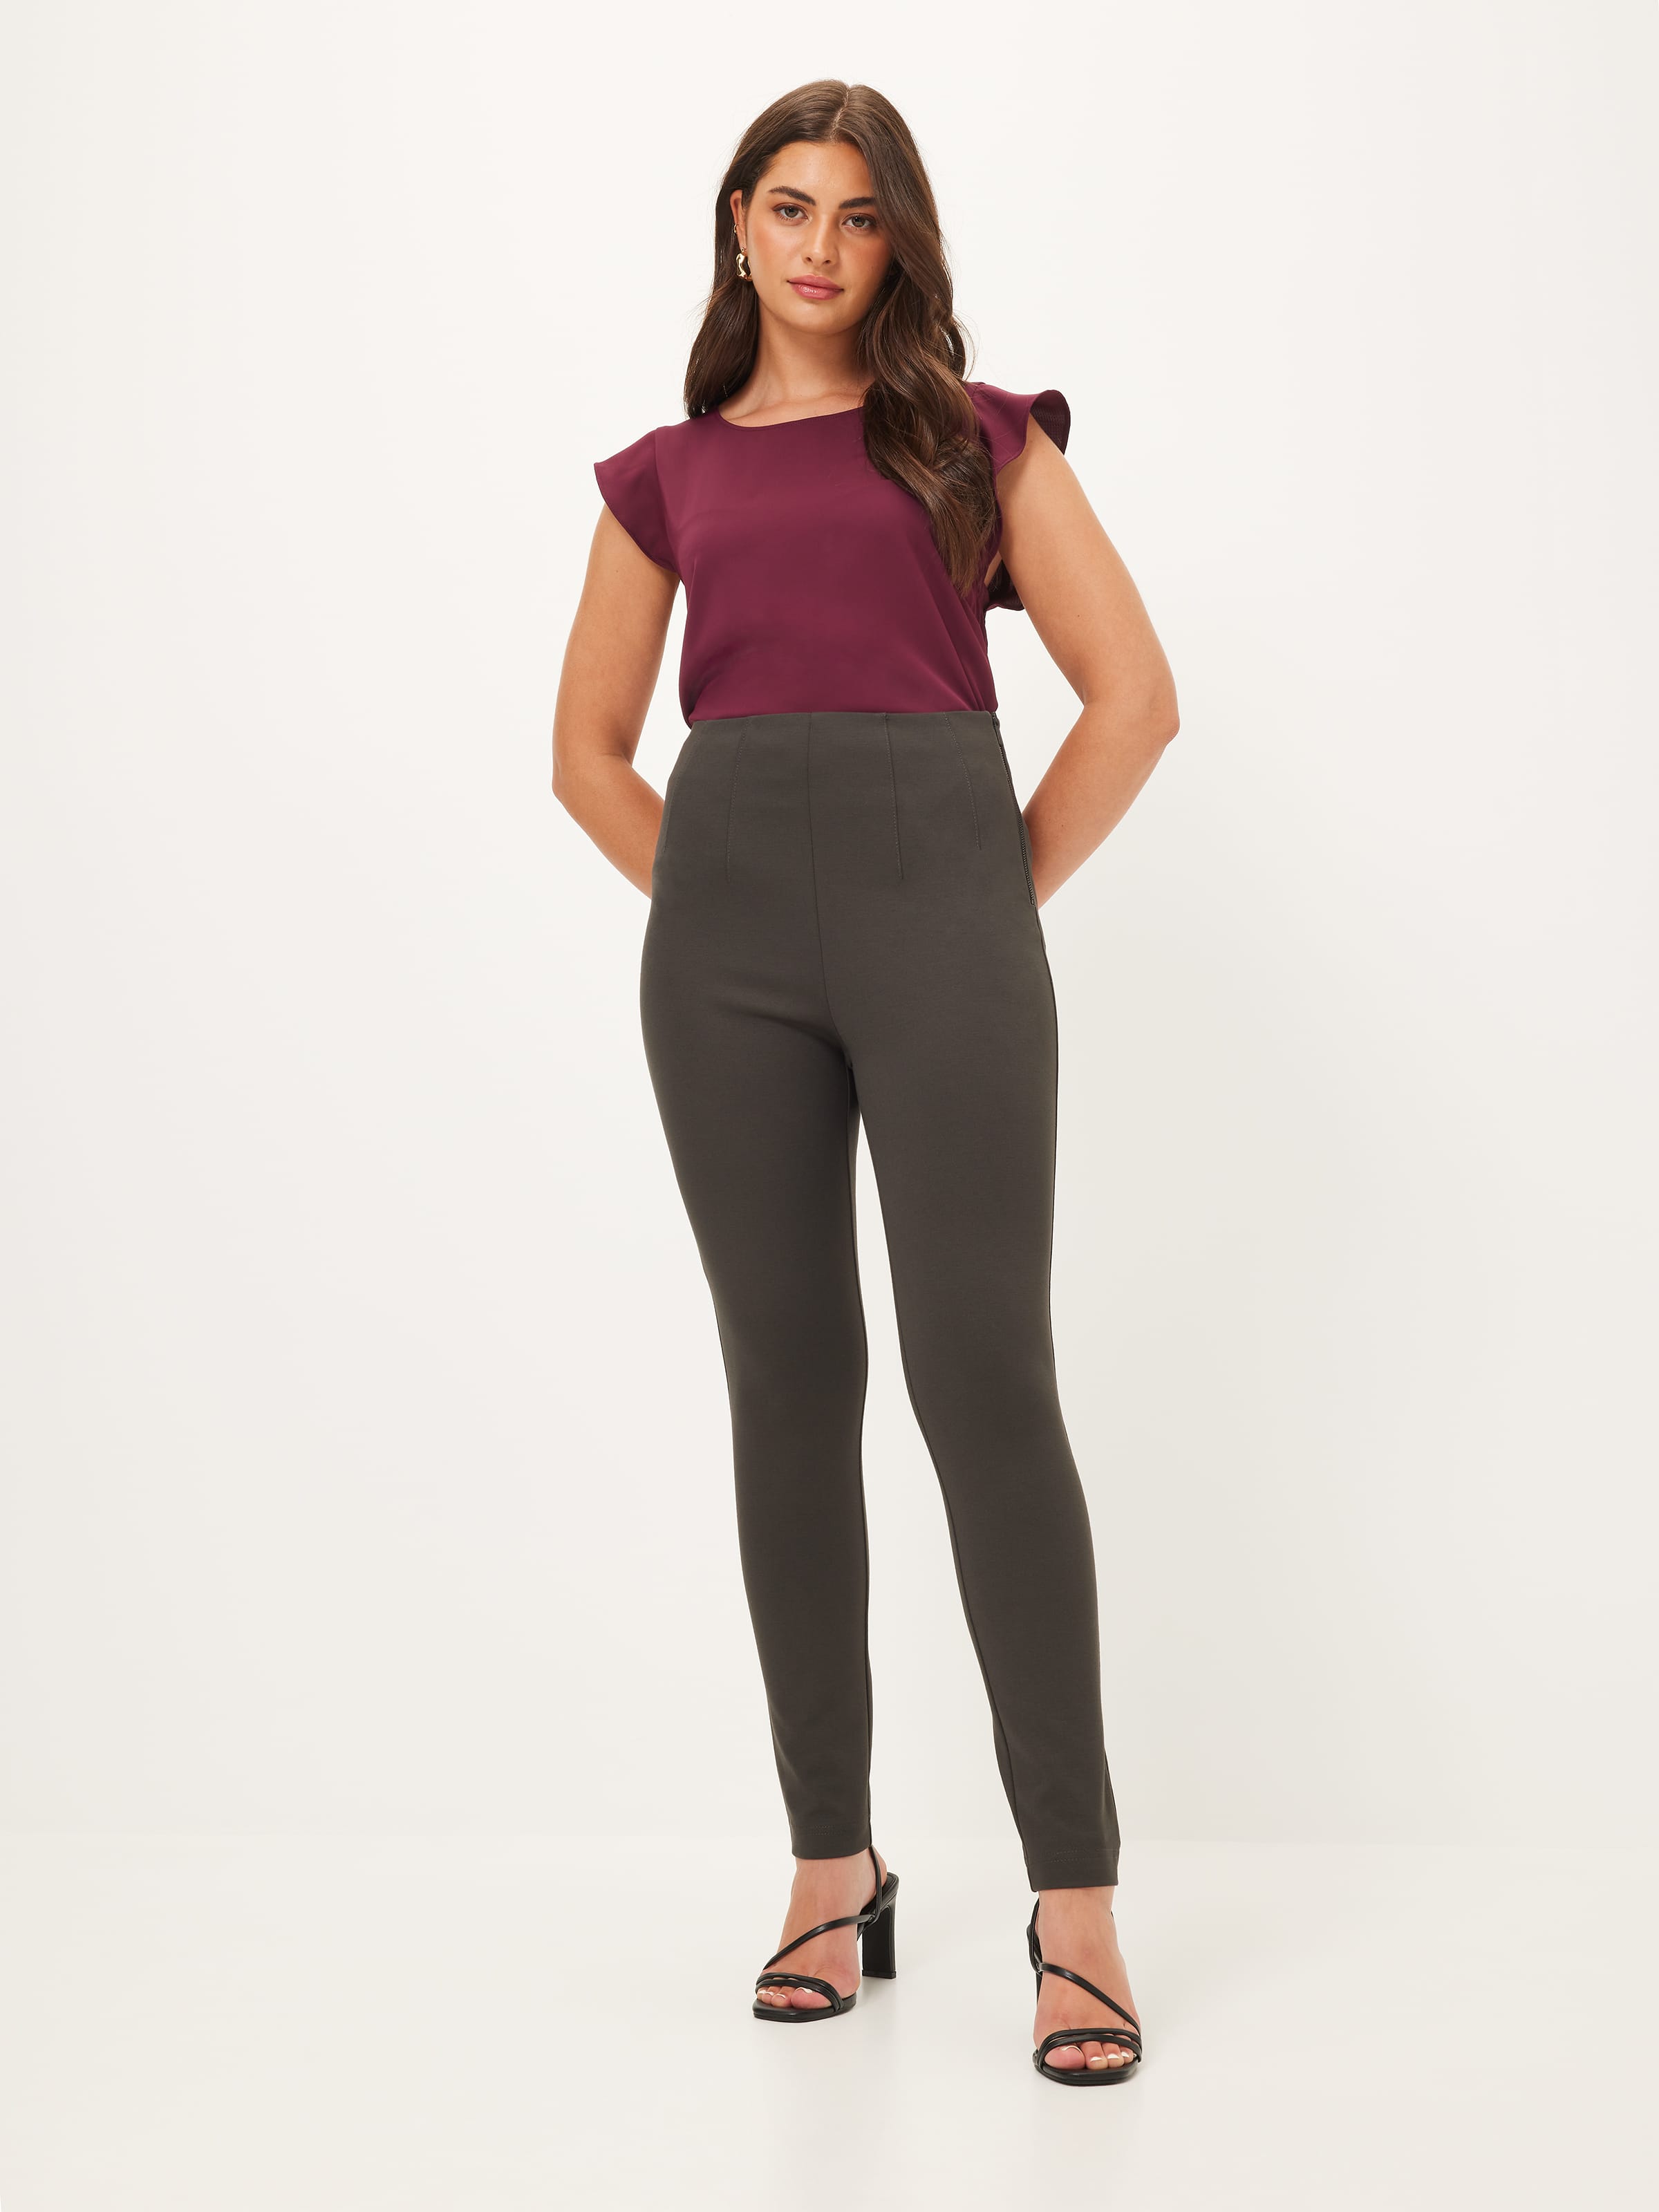 Women's Ponte Pants  Buy Women's Ponte Pant Online Australia